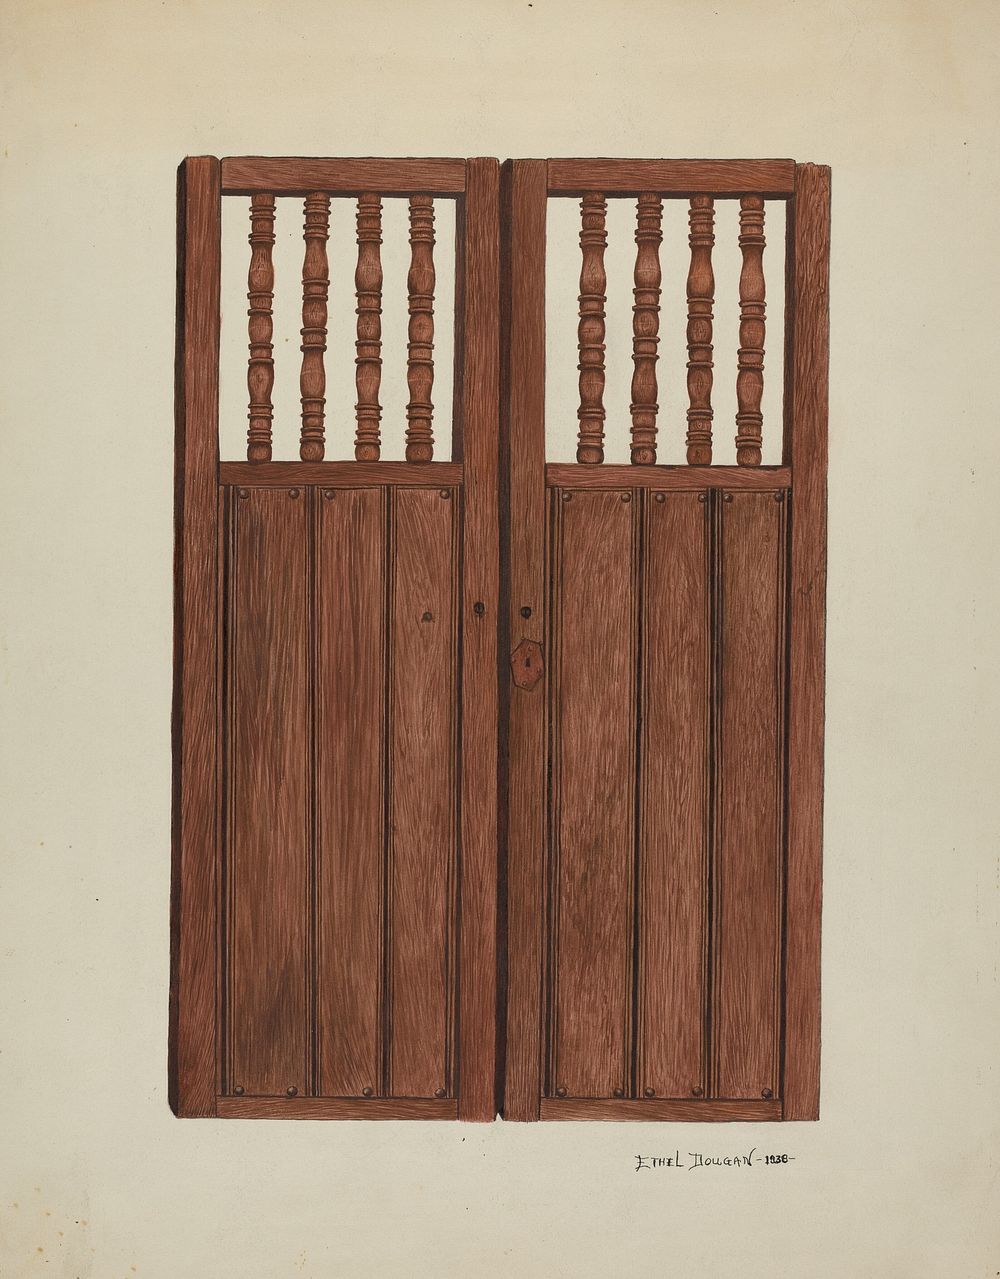 Doors to Baptistry - Mission San Juan Bautista (1938) by Ethel Dougan.  